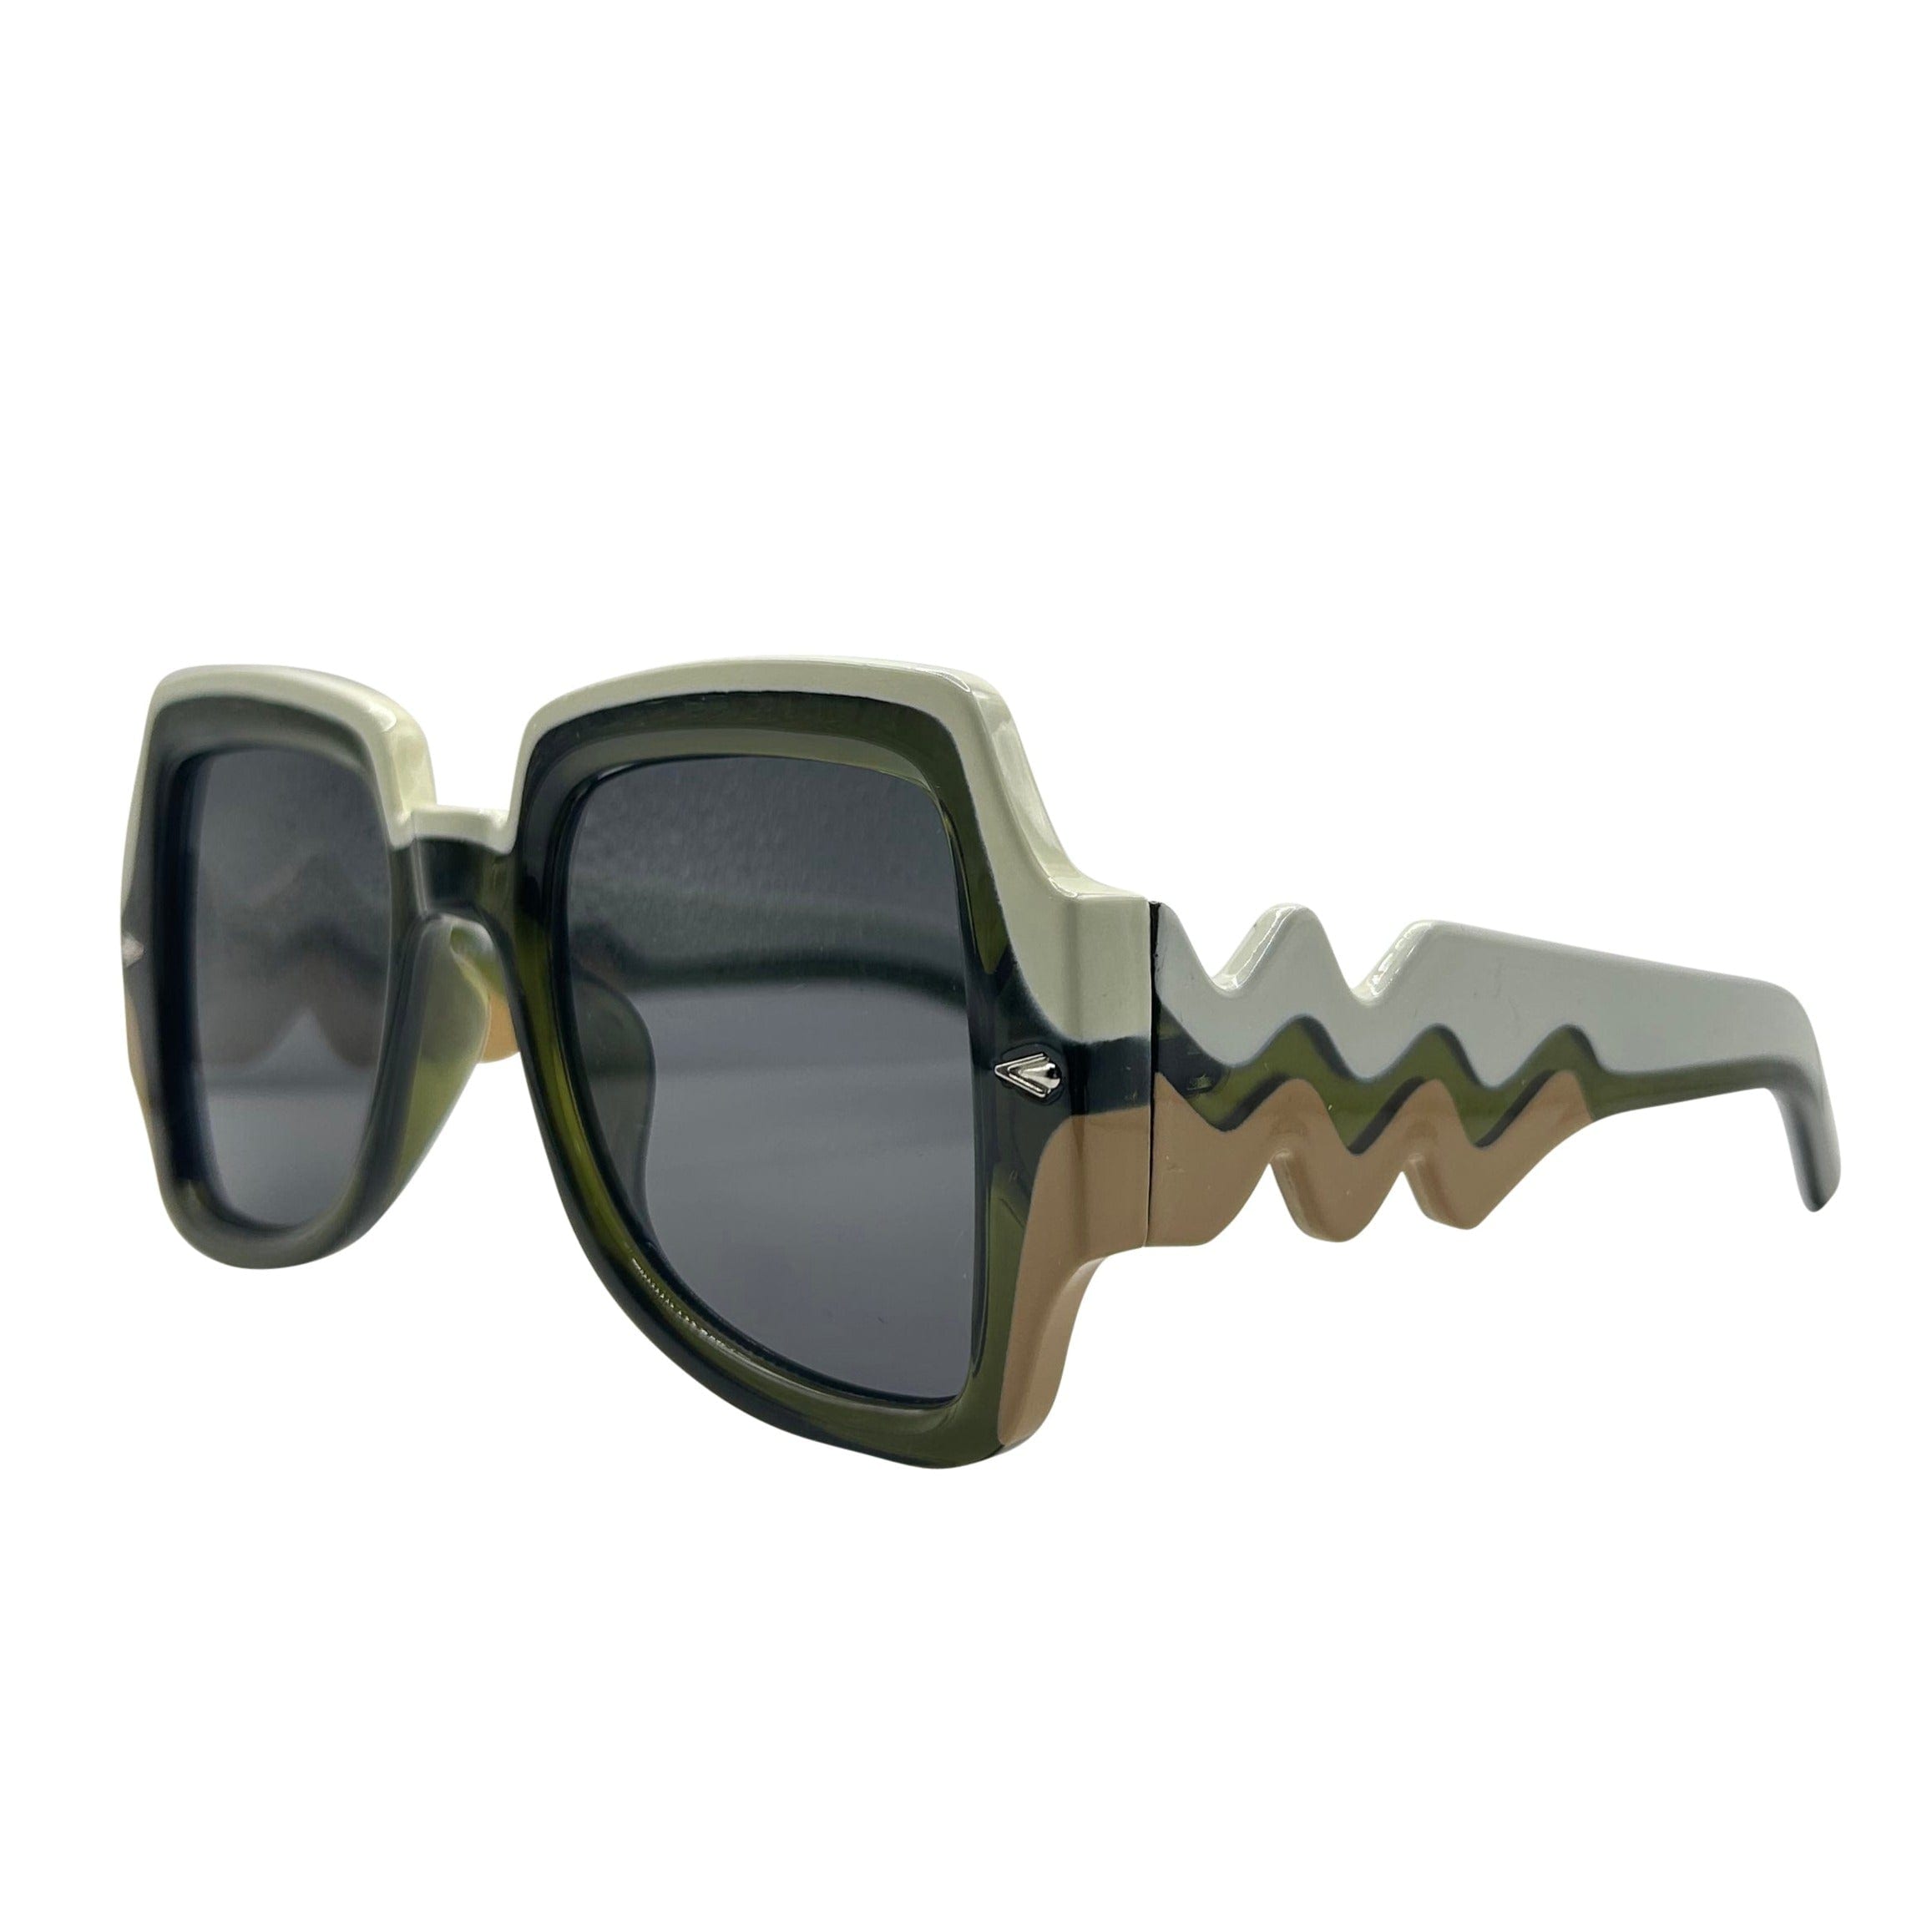 WEEKEND Square 70s Retro Sunglasses